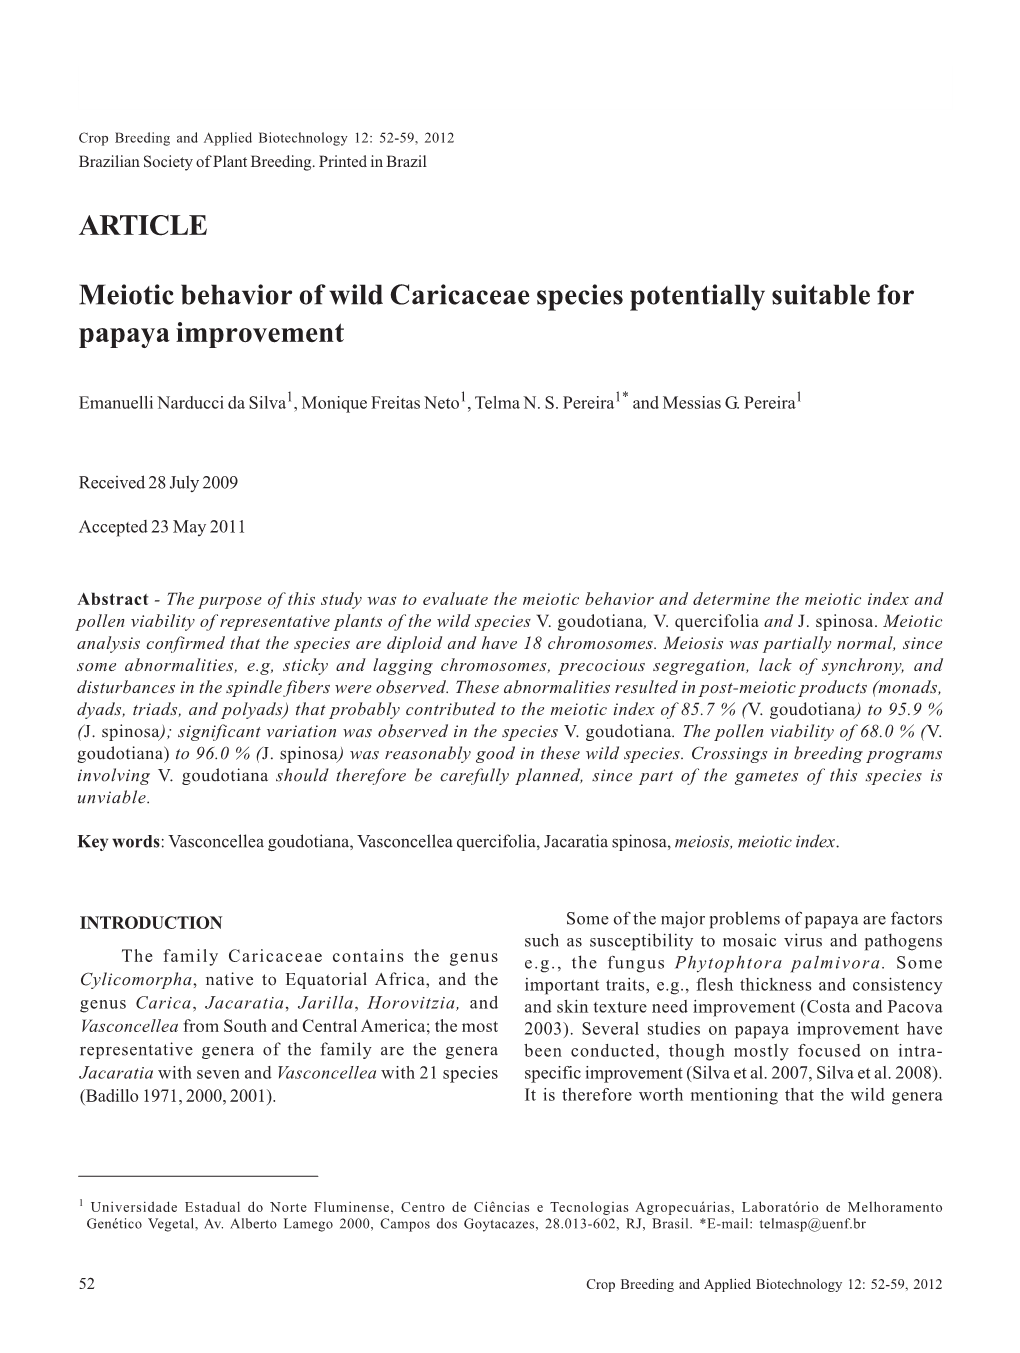 ARTICLE Meiotic Behavior of Wild Caricaceae Species Potentially